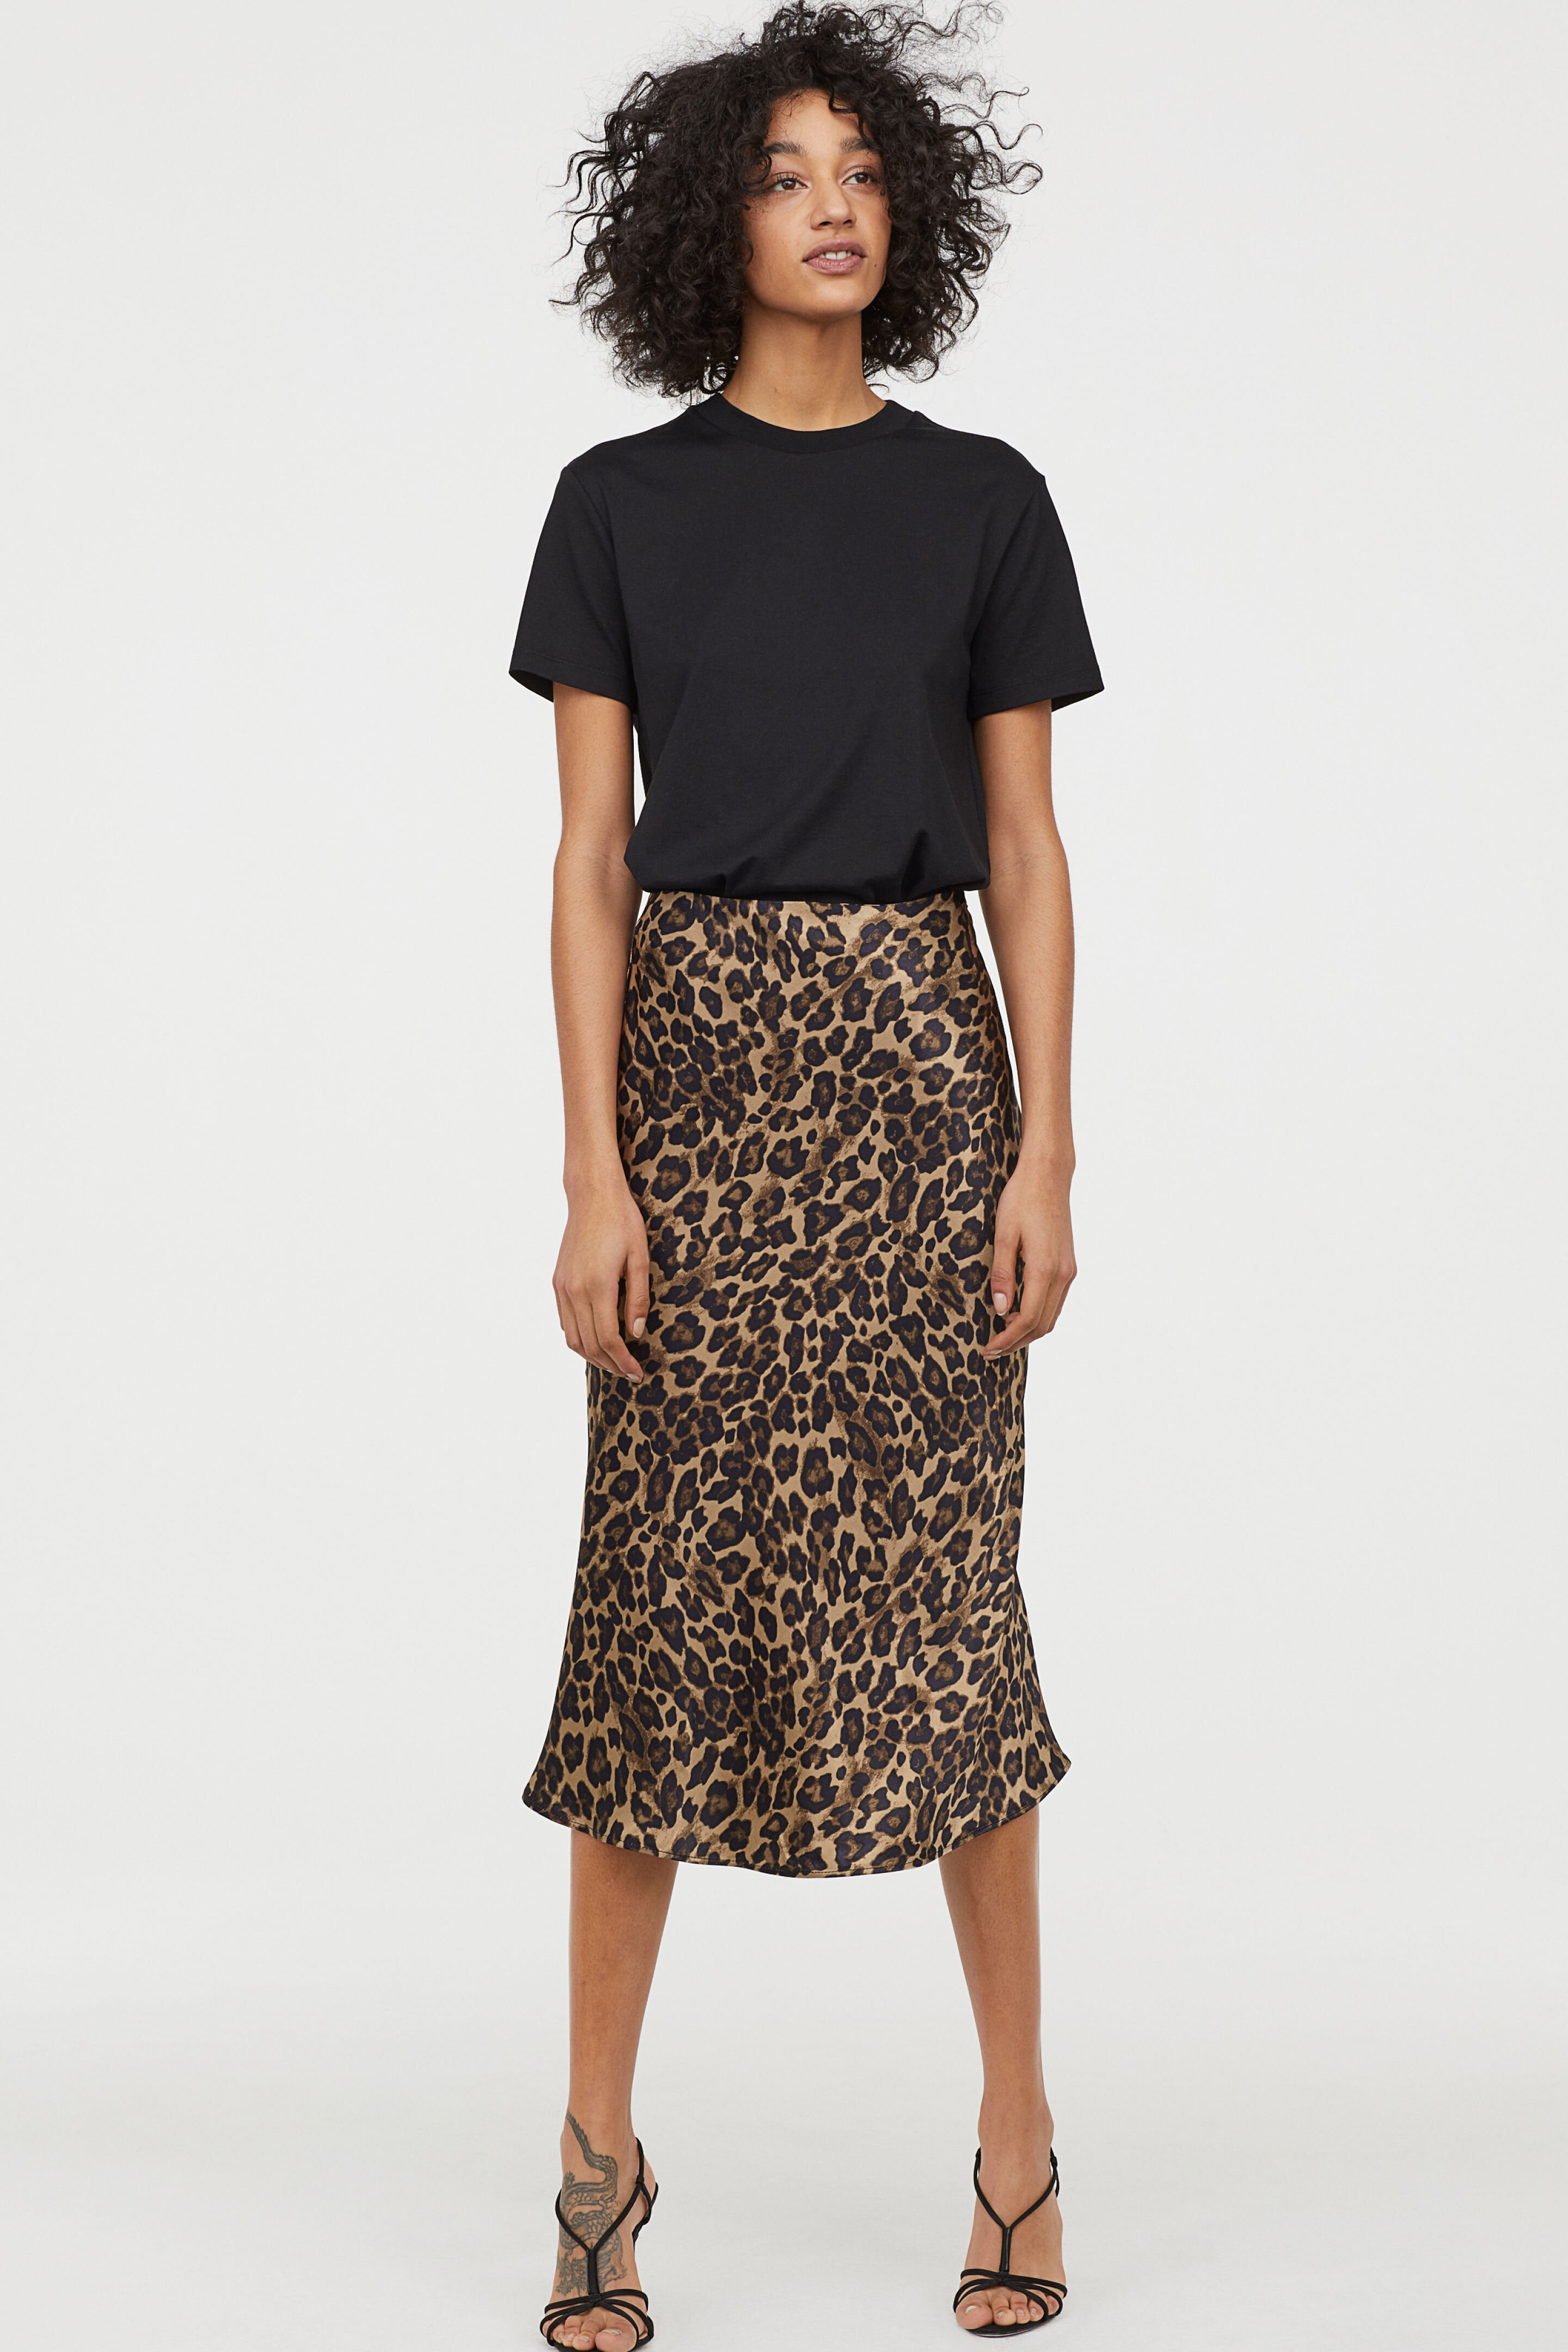 zara leopard print skirt